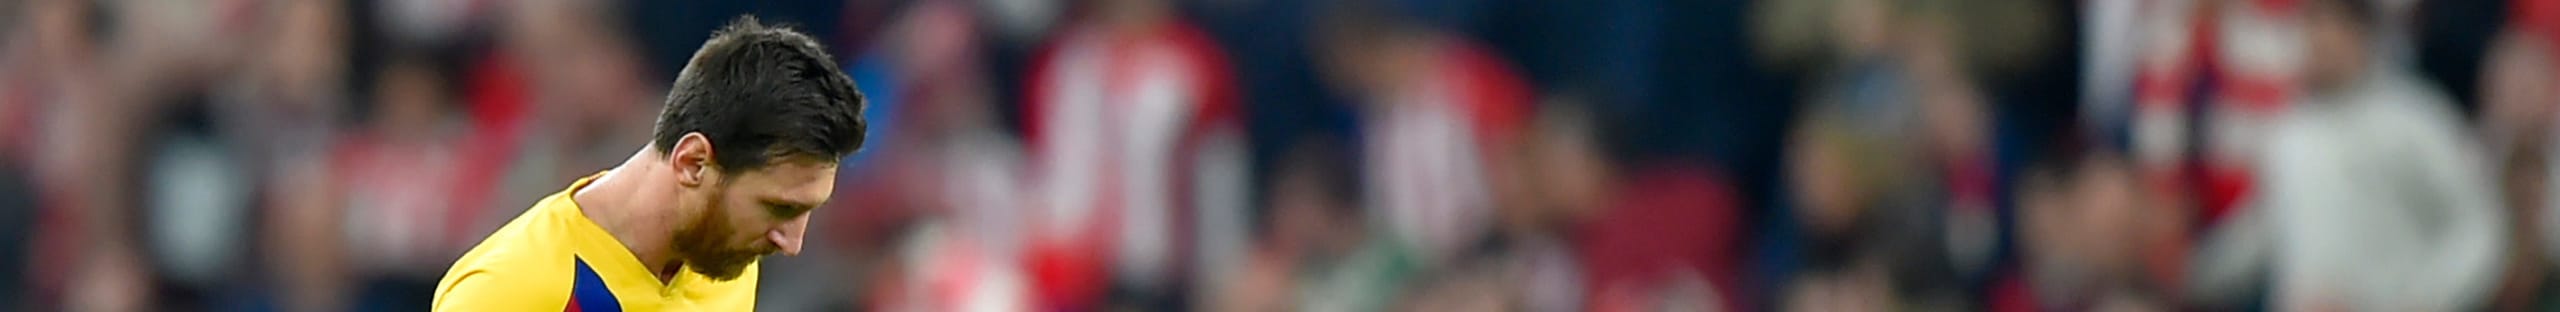 Betis-Barcellona, Quique Setién cerca la gara della svolta e si affida a Re Messi